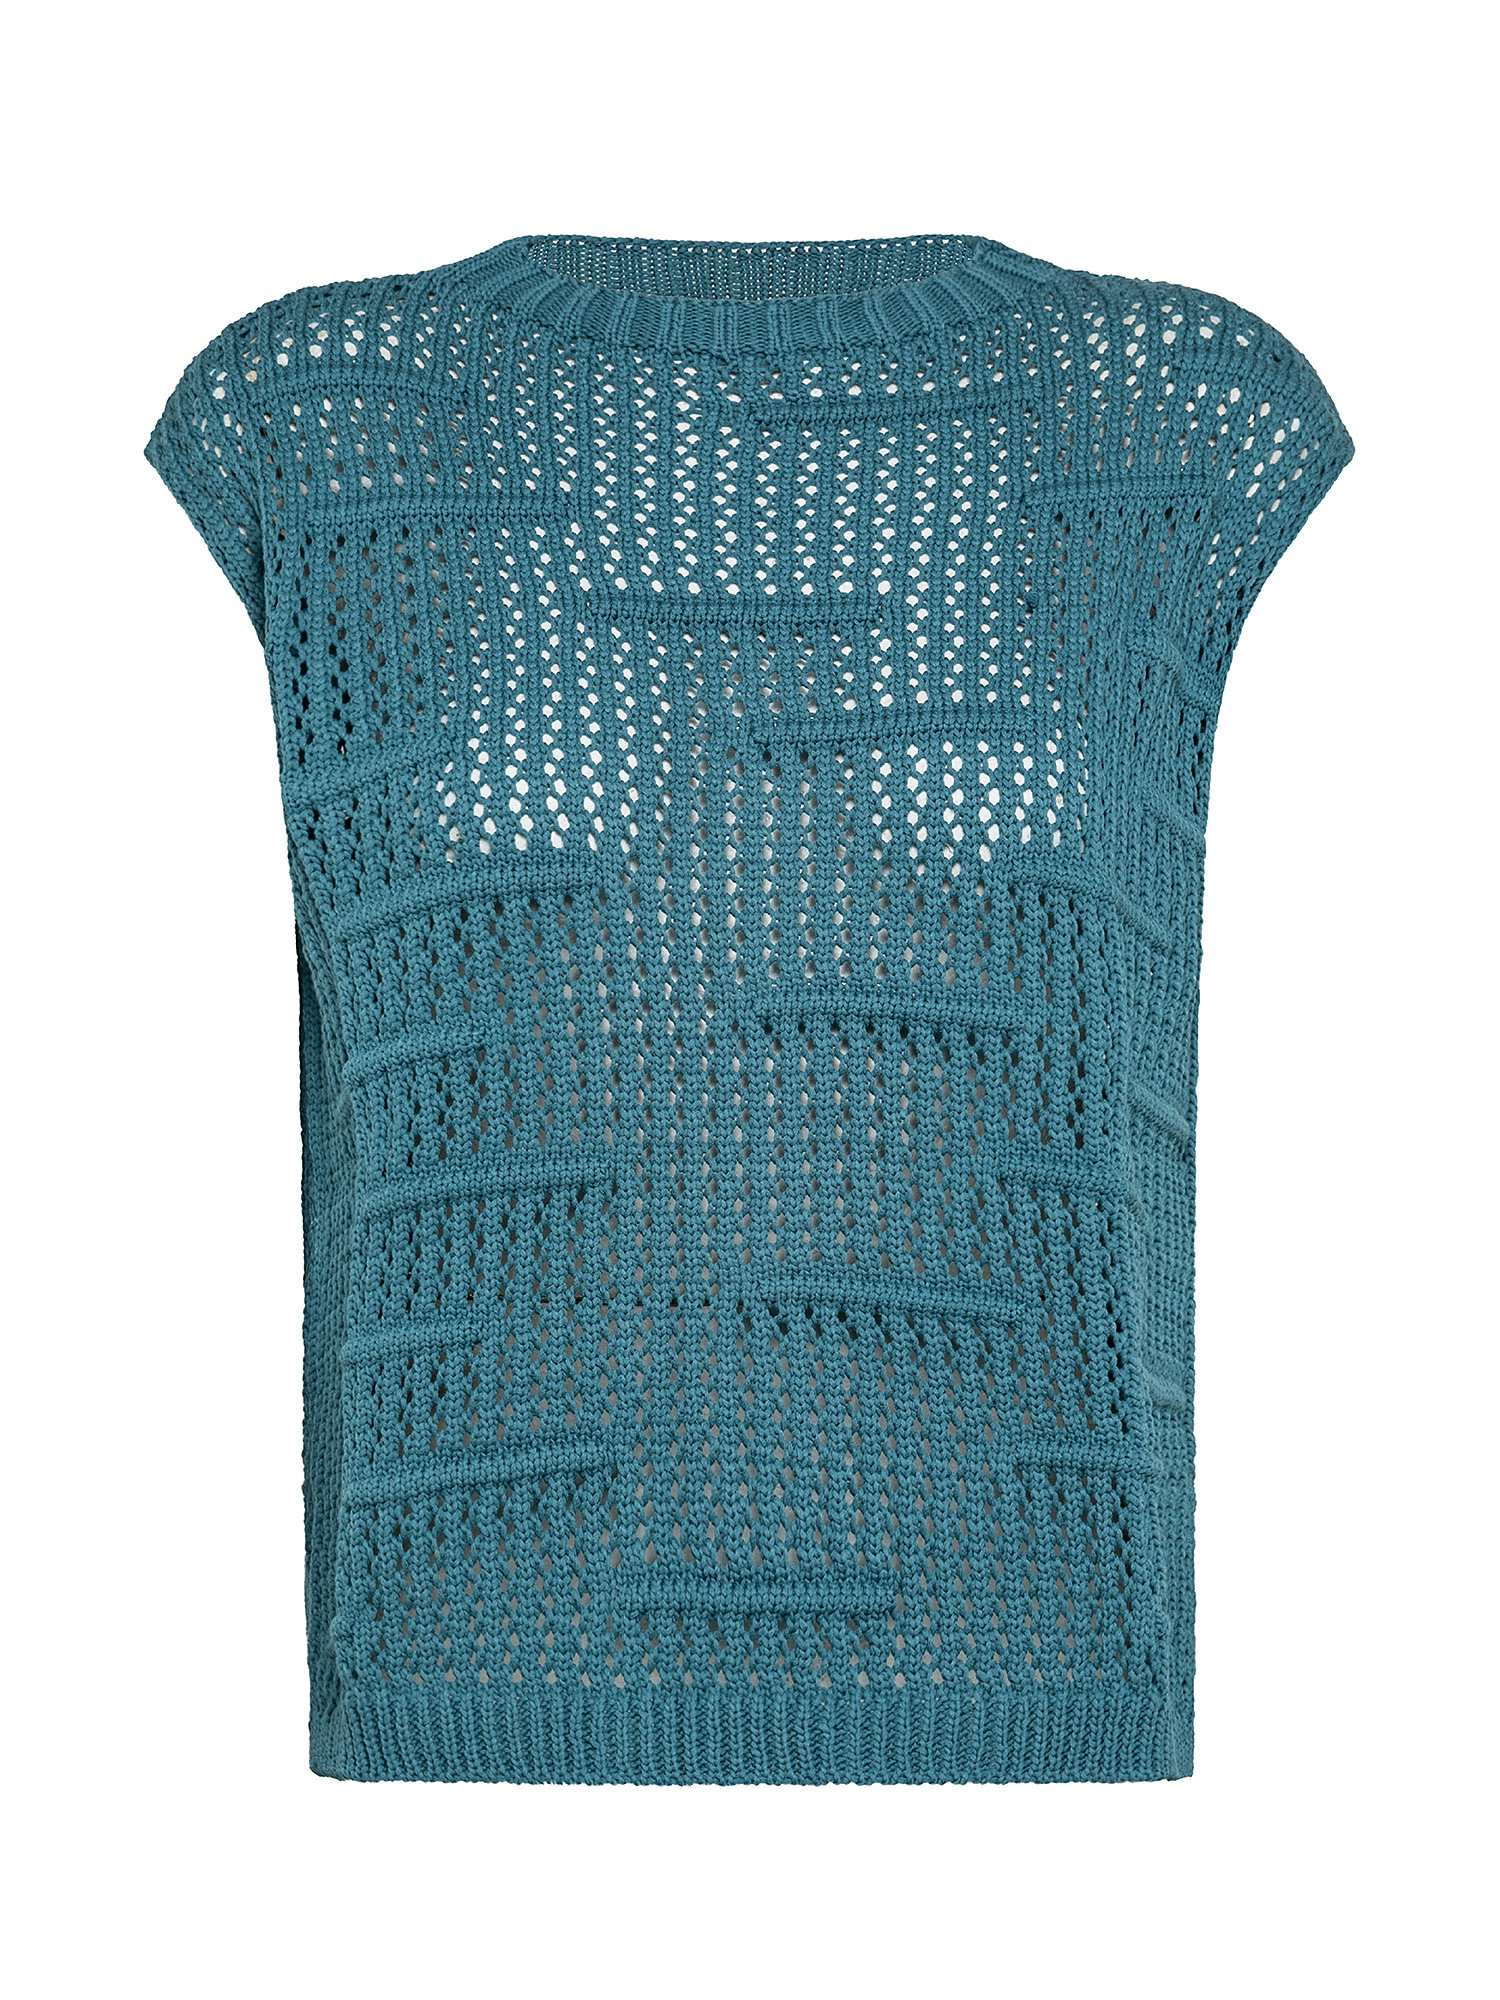 Maglia tricot, Azzurro turchese, large image number 0